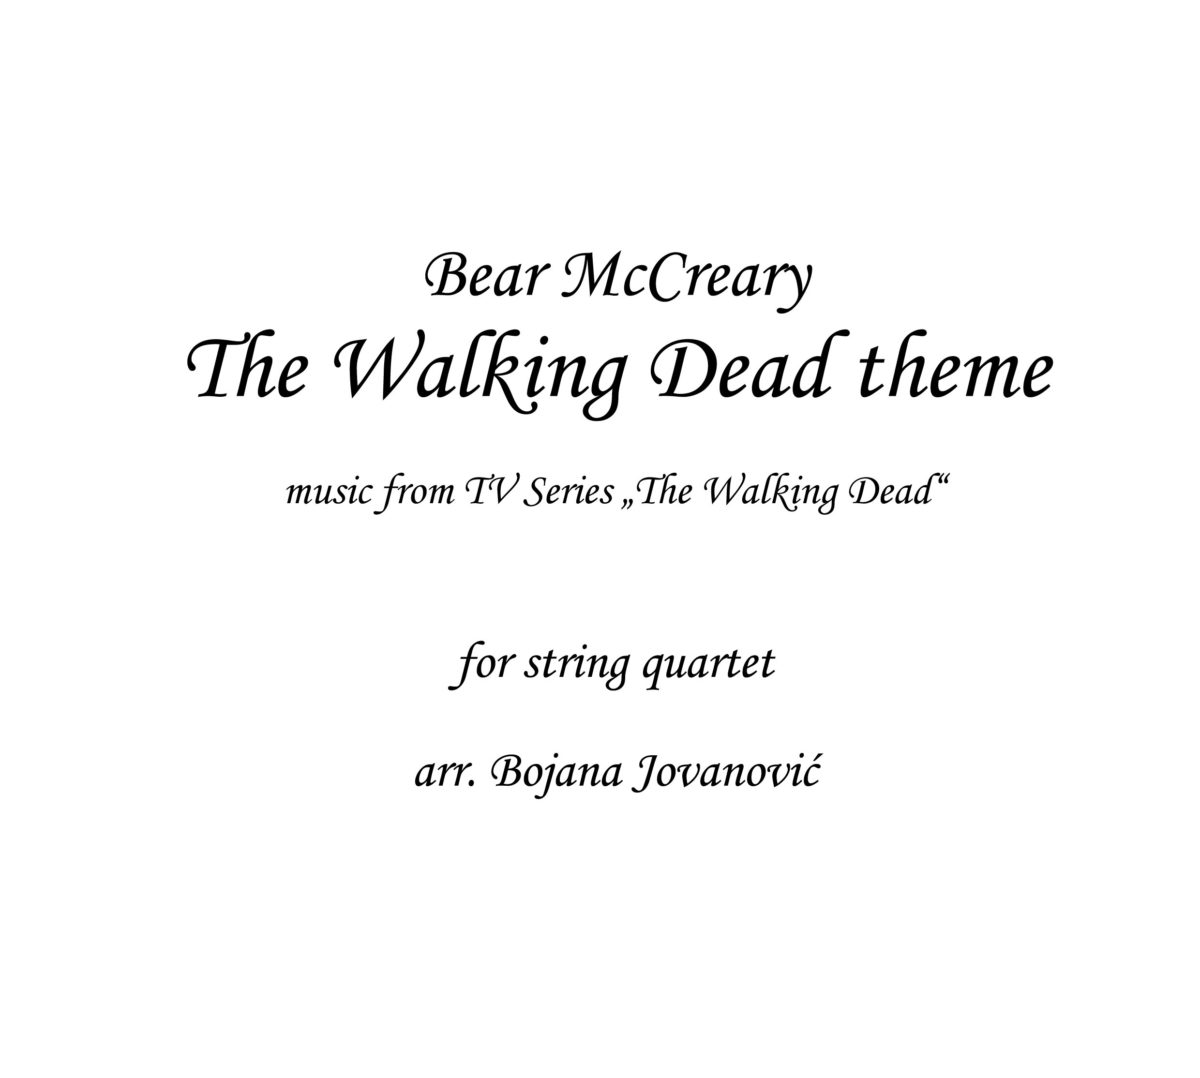 The Walking Dead theme Sheet music